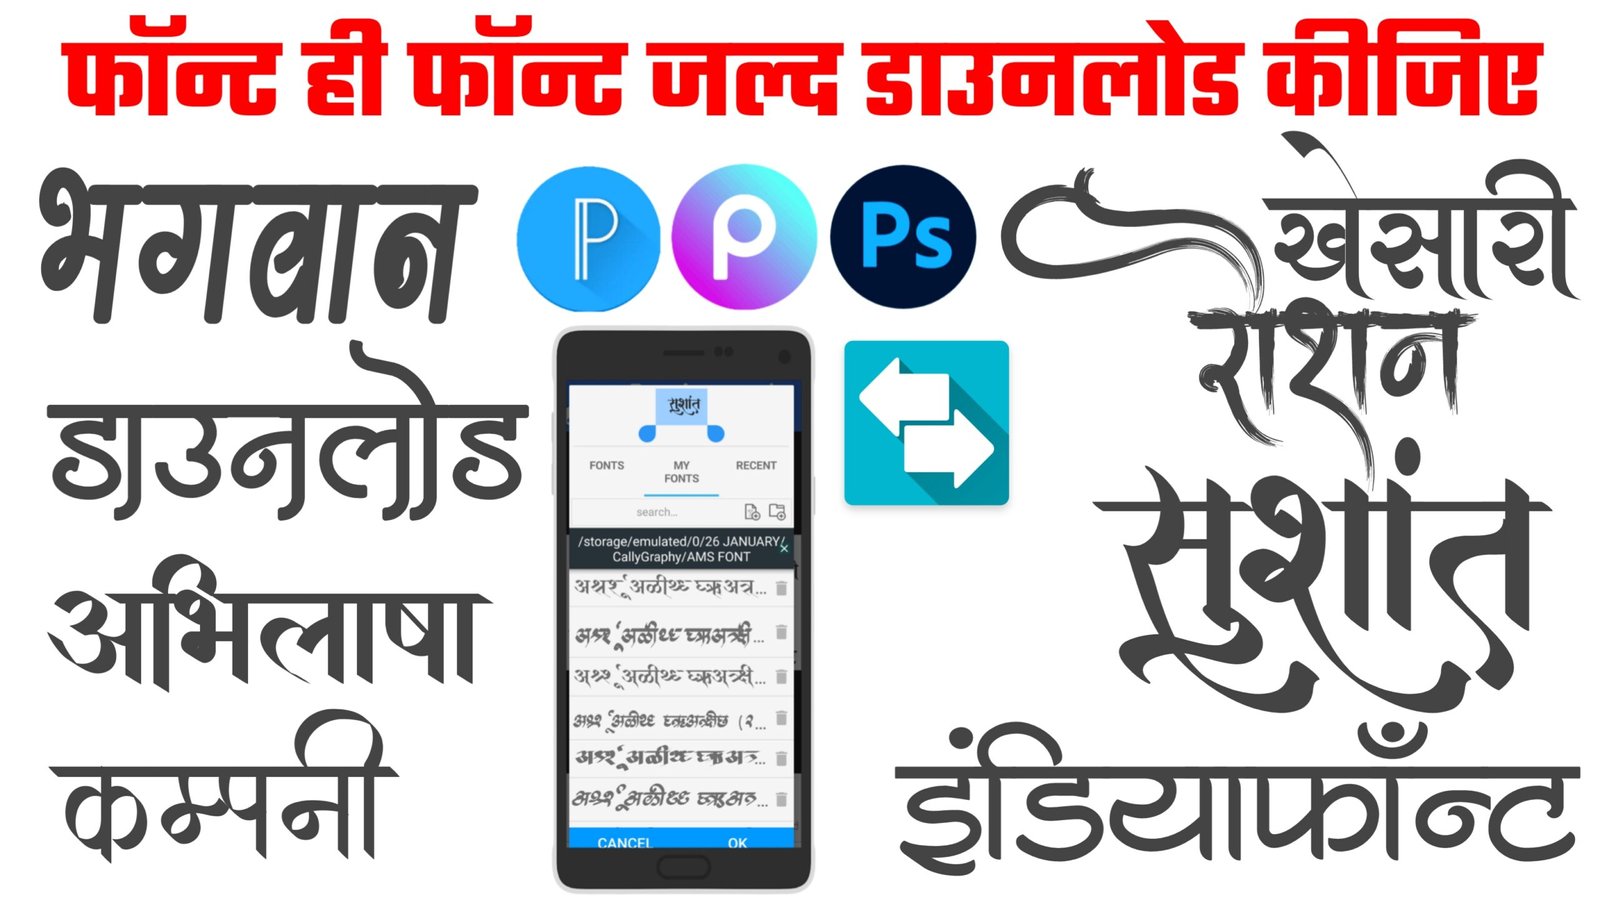 Hindi stylish font kaise download Karen| Hindi calligraphy design mobile| Ams font DG Fonts free download